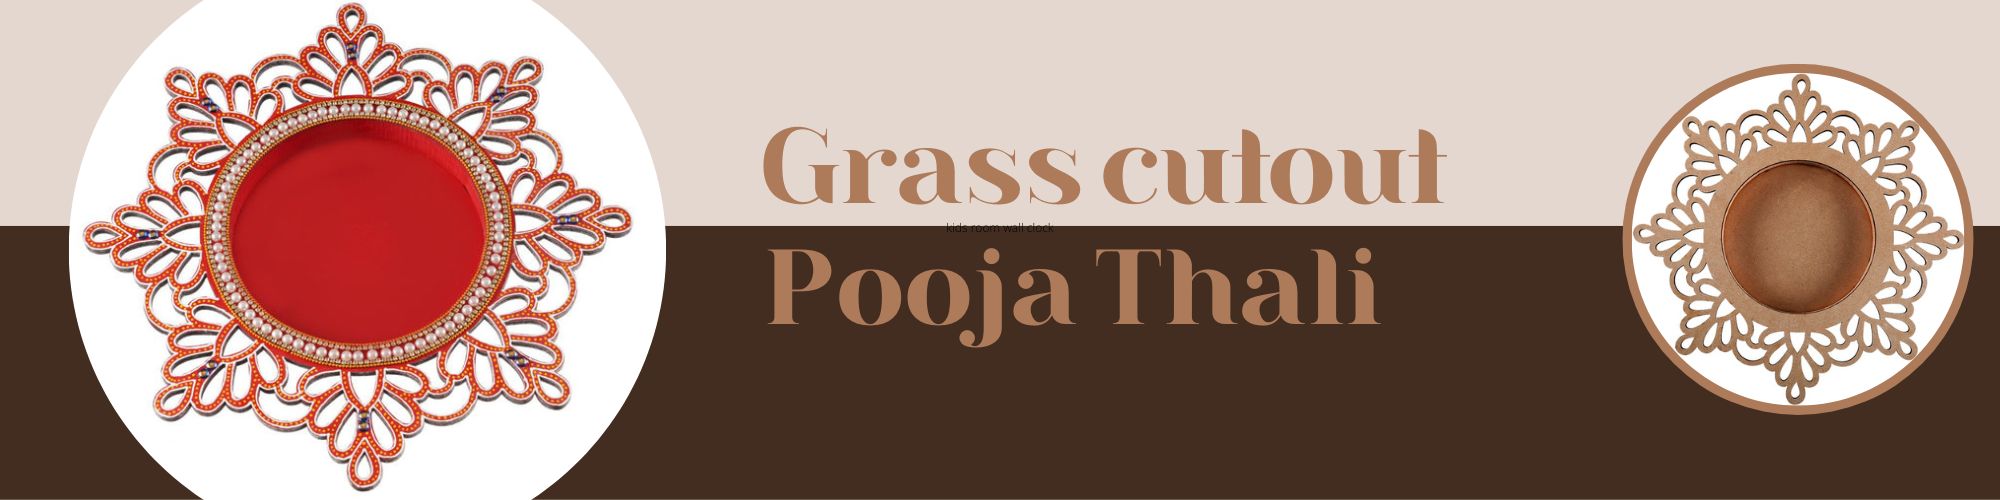 Grass cutout Pooja Thali